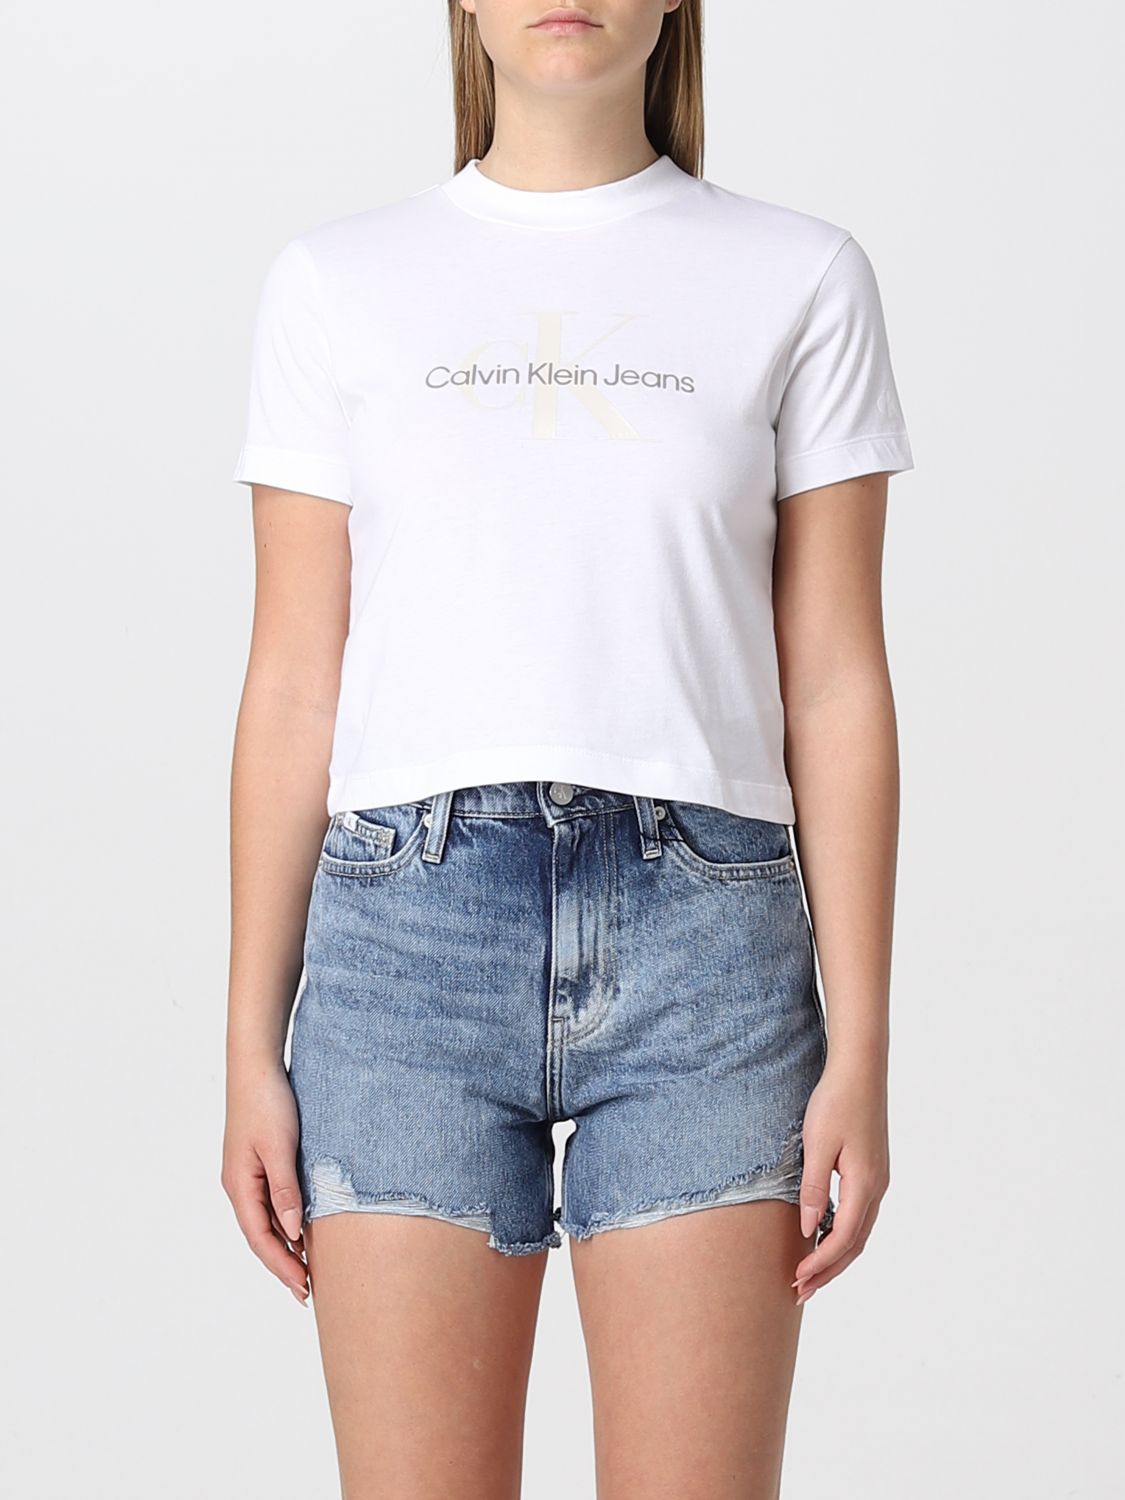 CALVIN KLEIN JEANS: t-shirt for woman - White | Calvin Klein Jeans t-shirt  J20J218852 online on 